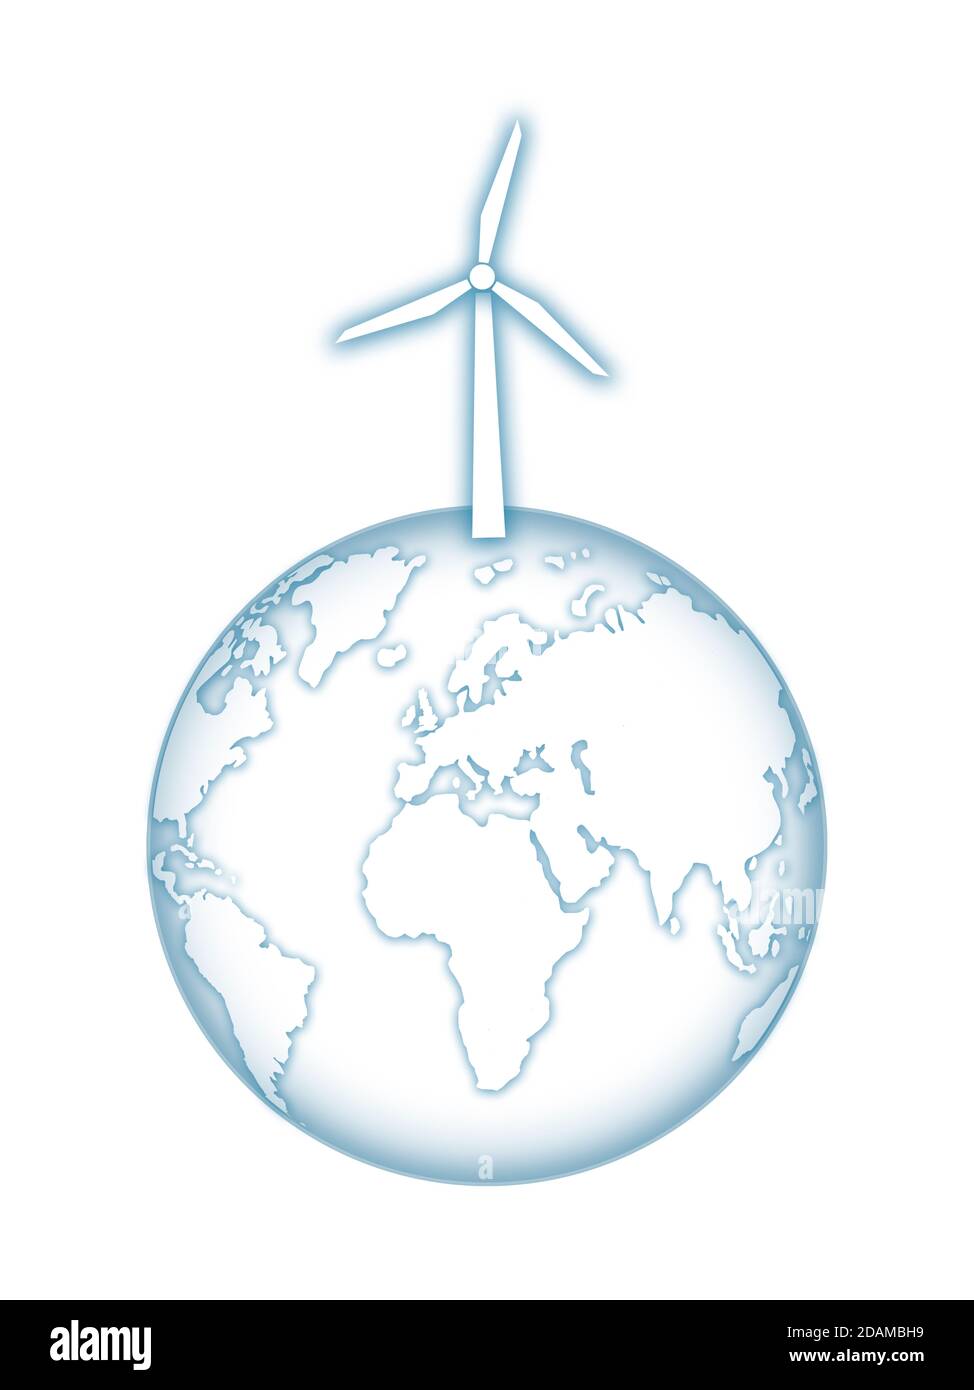 Earth with wind turbine generator, illustration. Stock Photo